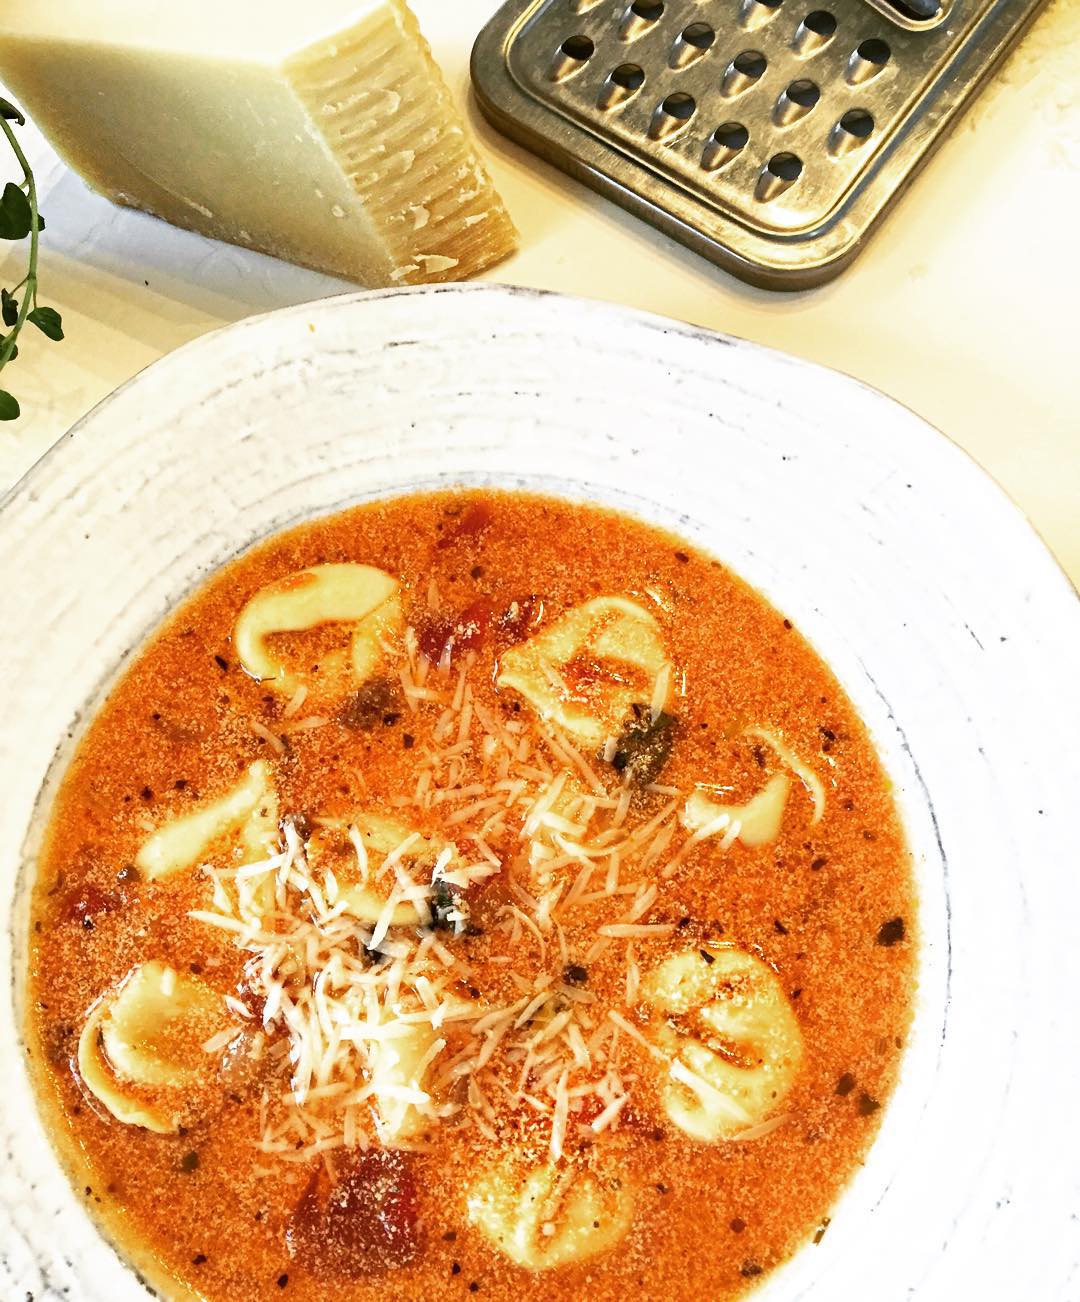 Homemade creamy tortellini tomato soup yes please #sickofturkey #caseofthemondays #cthomemade #soup #recipe #italian #cheese #parmesan #grated #tomatoes #tomatosoup #mozzarella #foodie #wine #redwine #foodporn #pasta #nomnom #yahoofood #huffposttaste #thekitchn #feedfeed #rrmagfan #foodandwine #delicious #foodblogger